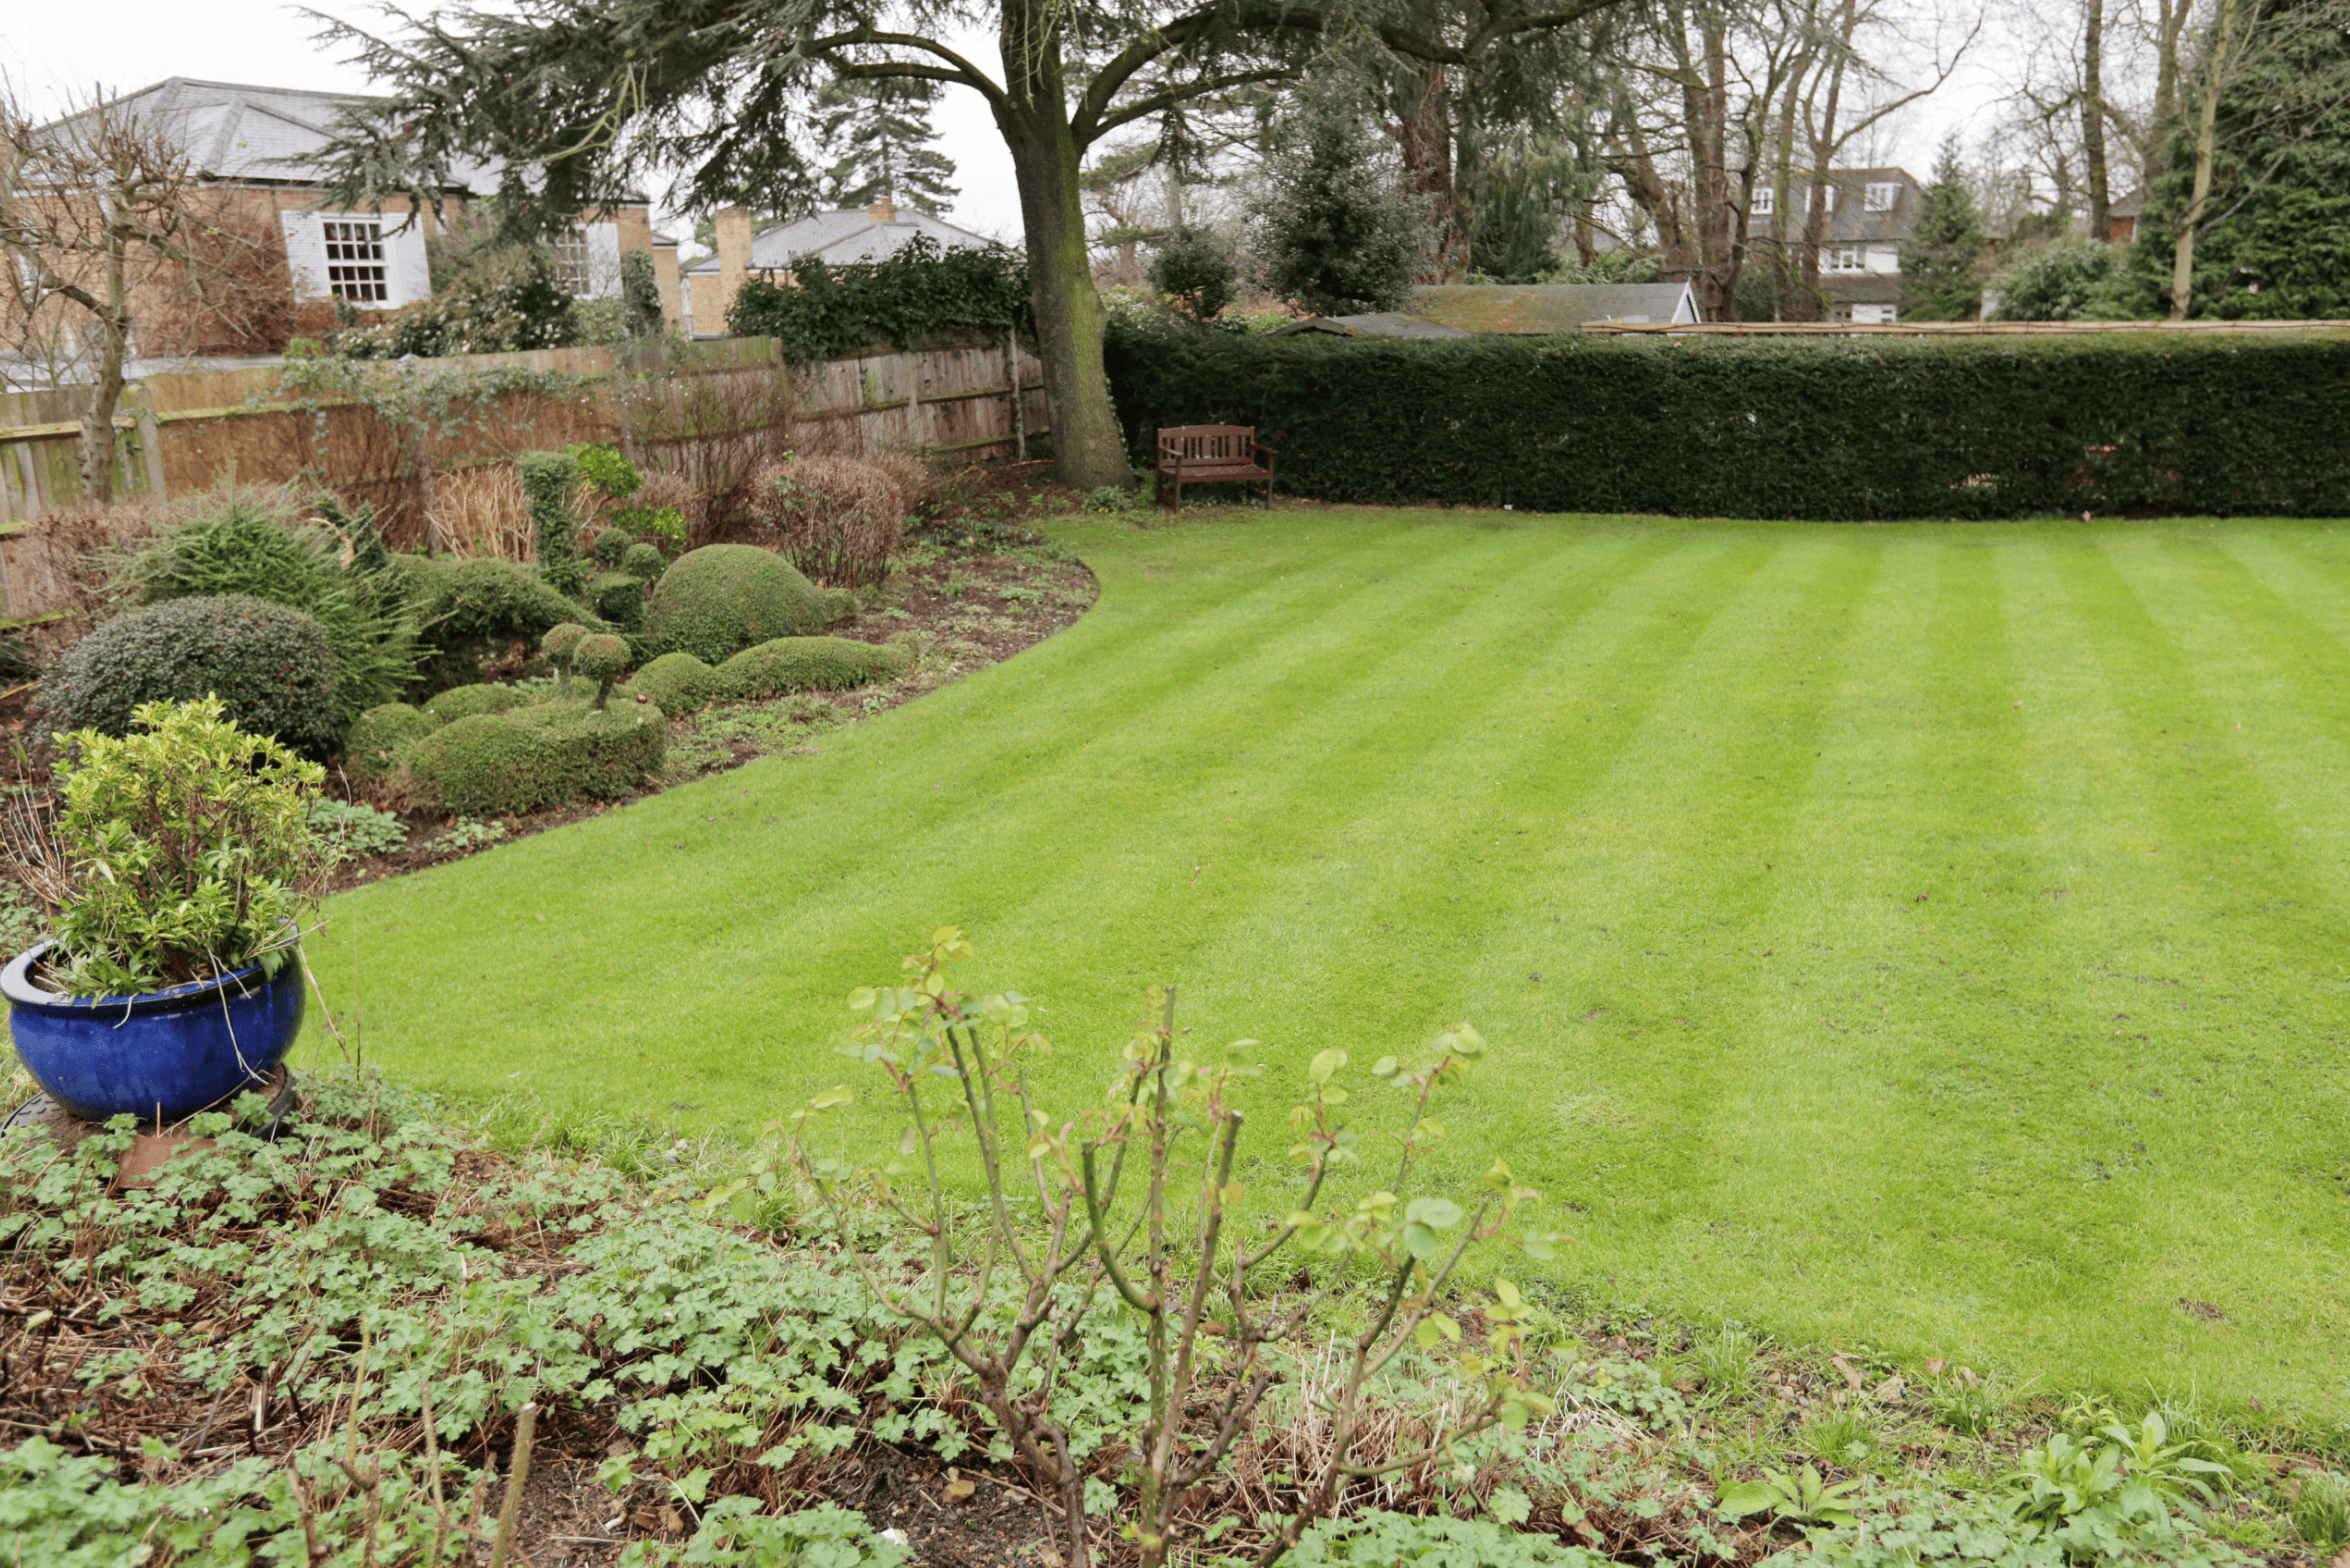 Garden of Speirs House in New Malden, London